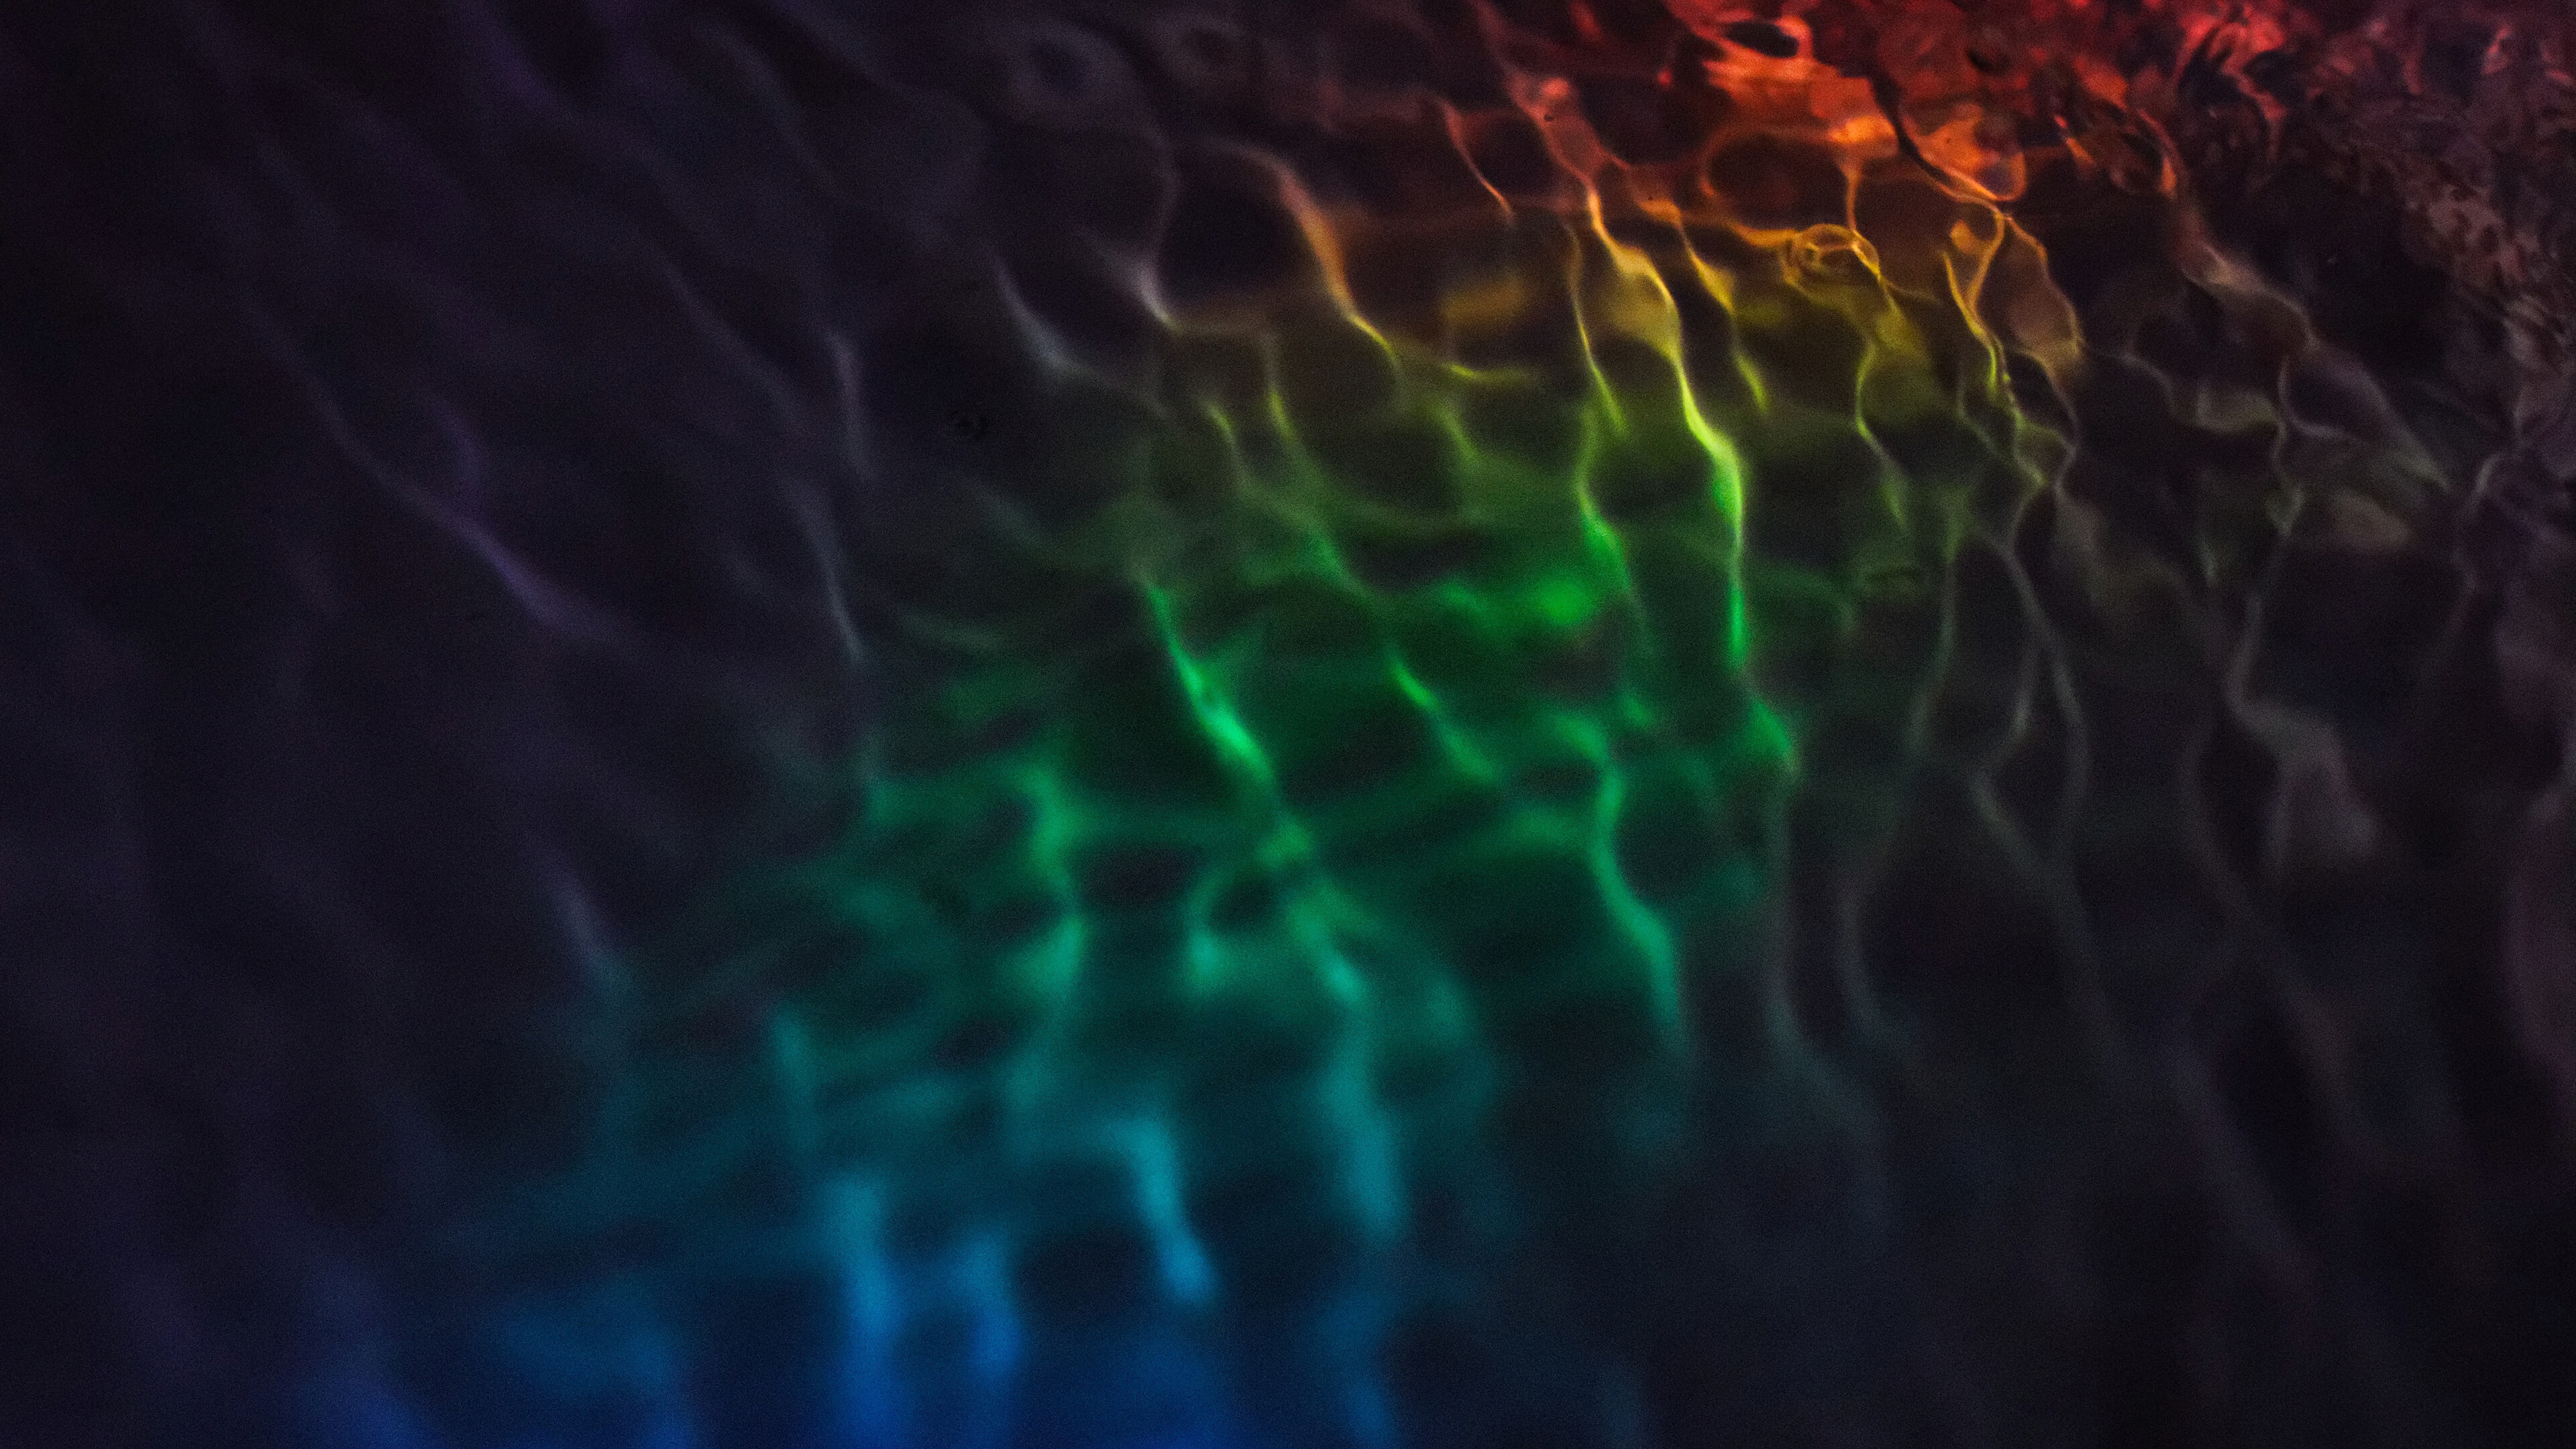 HD wallpaper, Abstract Rainbow Design In 1280X1024 Resolution, Captivating Imagery, High Definition Wallpaper, Vibrant Visual Delight, 3840X2160 4K Desktop, Desktop 4K Rainbow Background Image